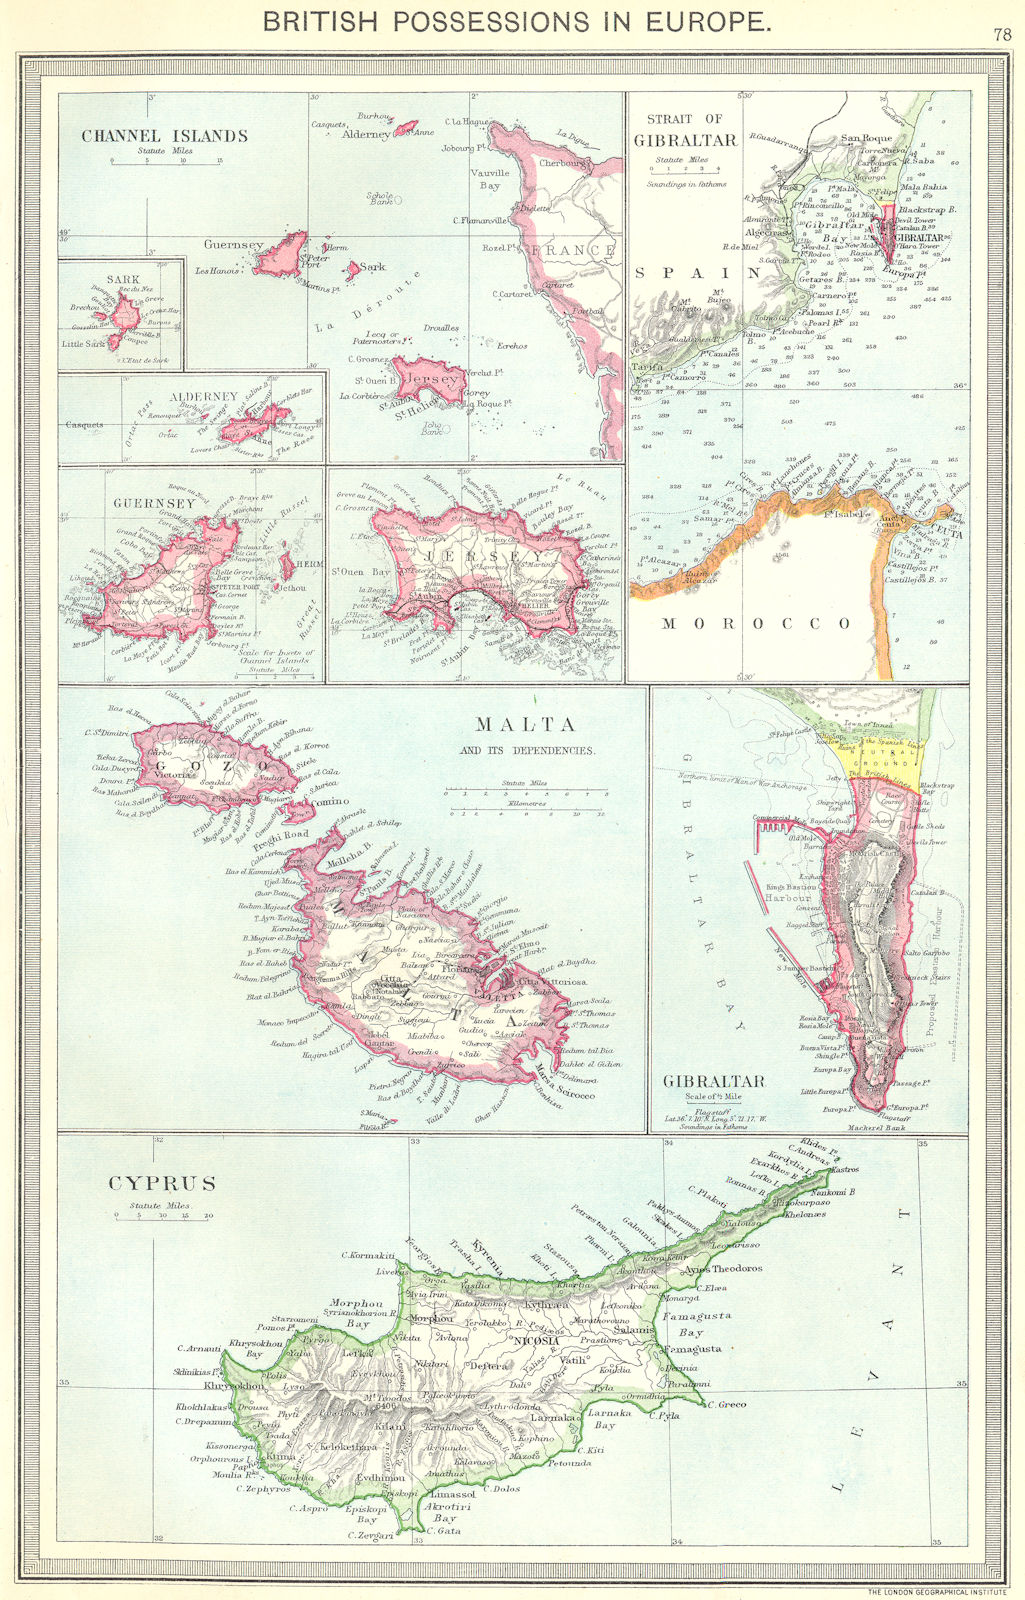 BRITISH EUROPEAN POSSESSIONS. Channel islands Gibraltar Malta Cyprus 1907 map